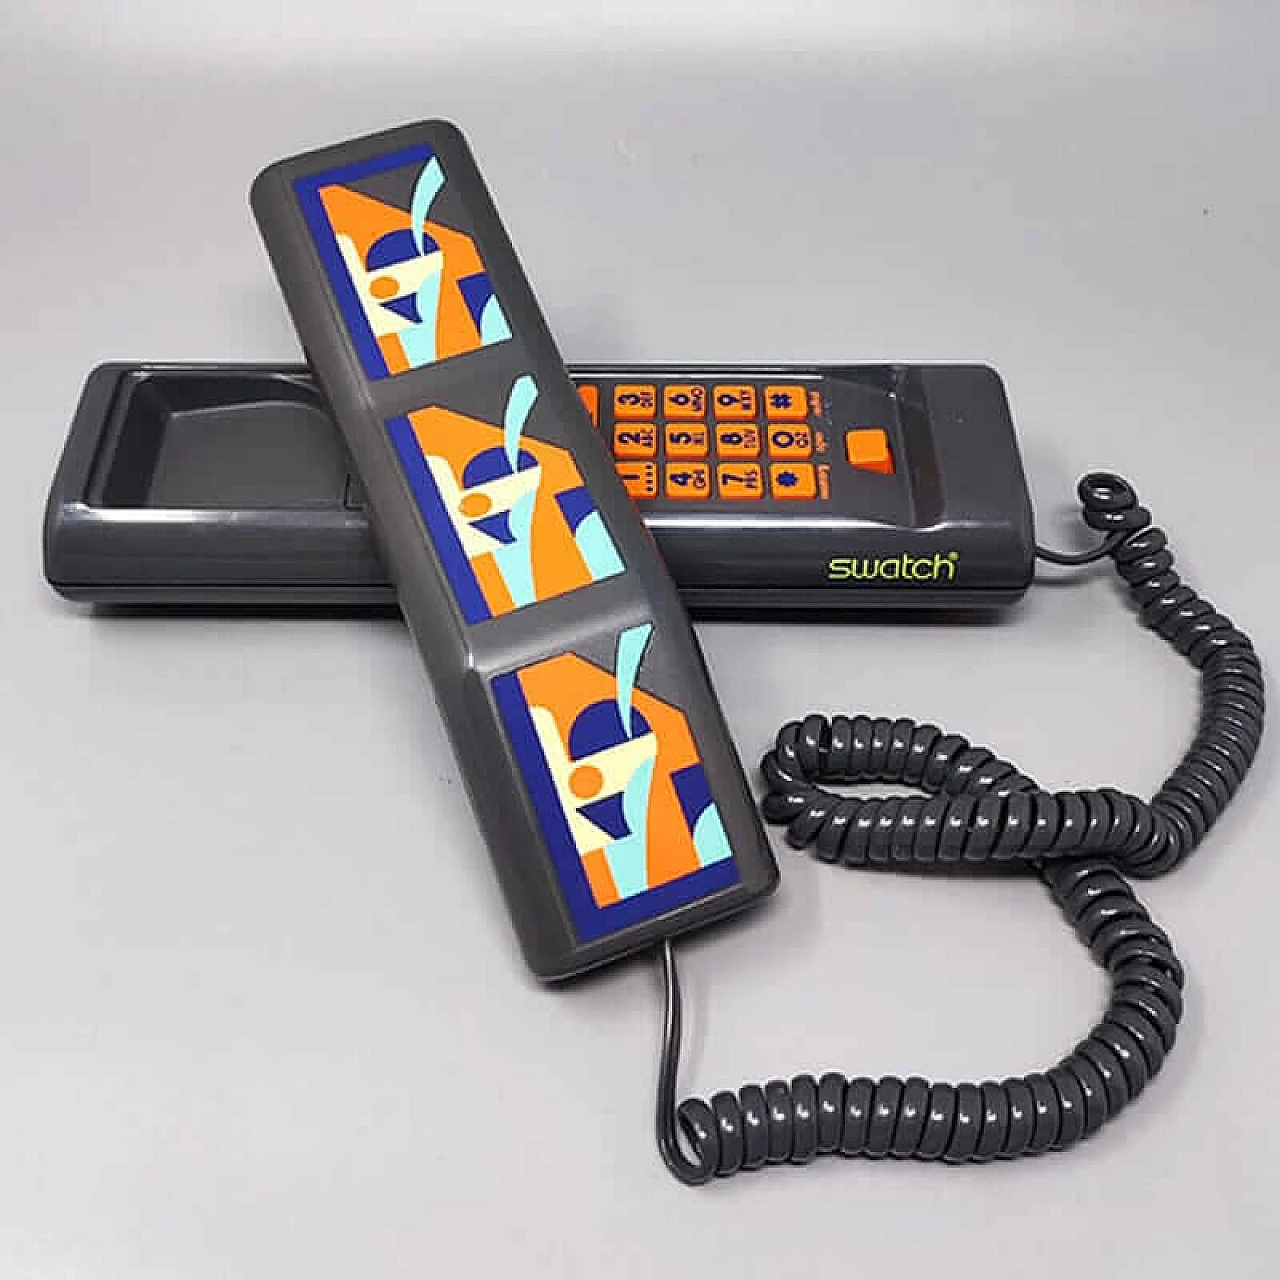 Deco Swatch Twin Phone landline phone, 1980s 6